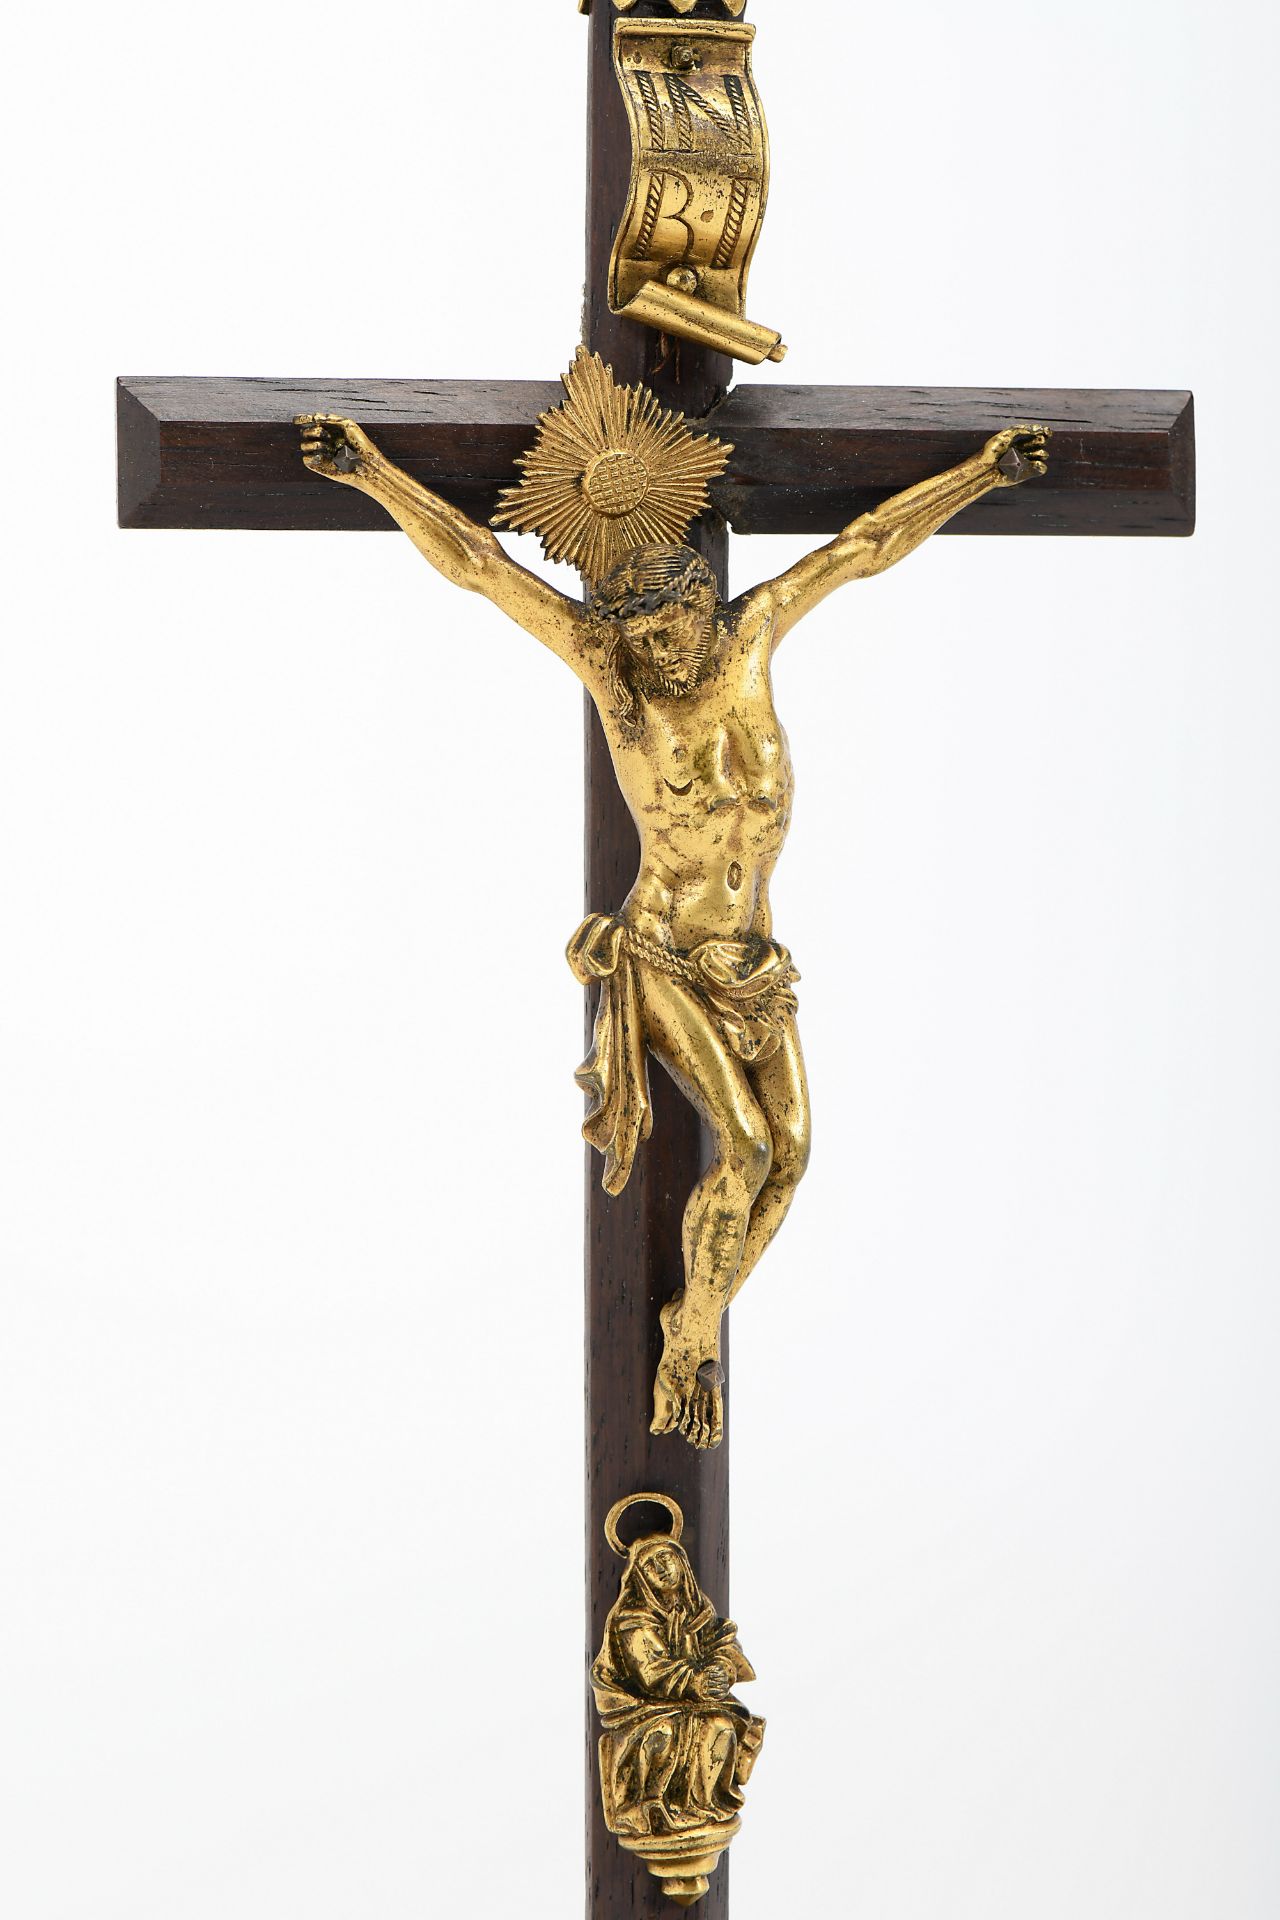 A Crucifix - Image 2 of 2